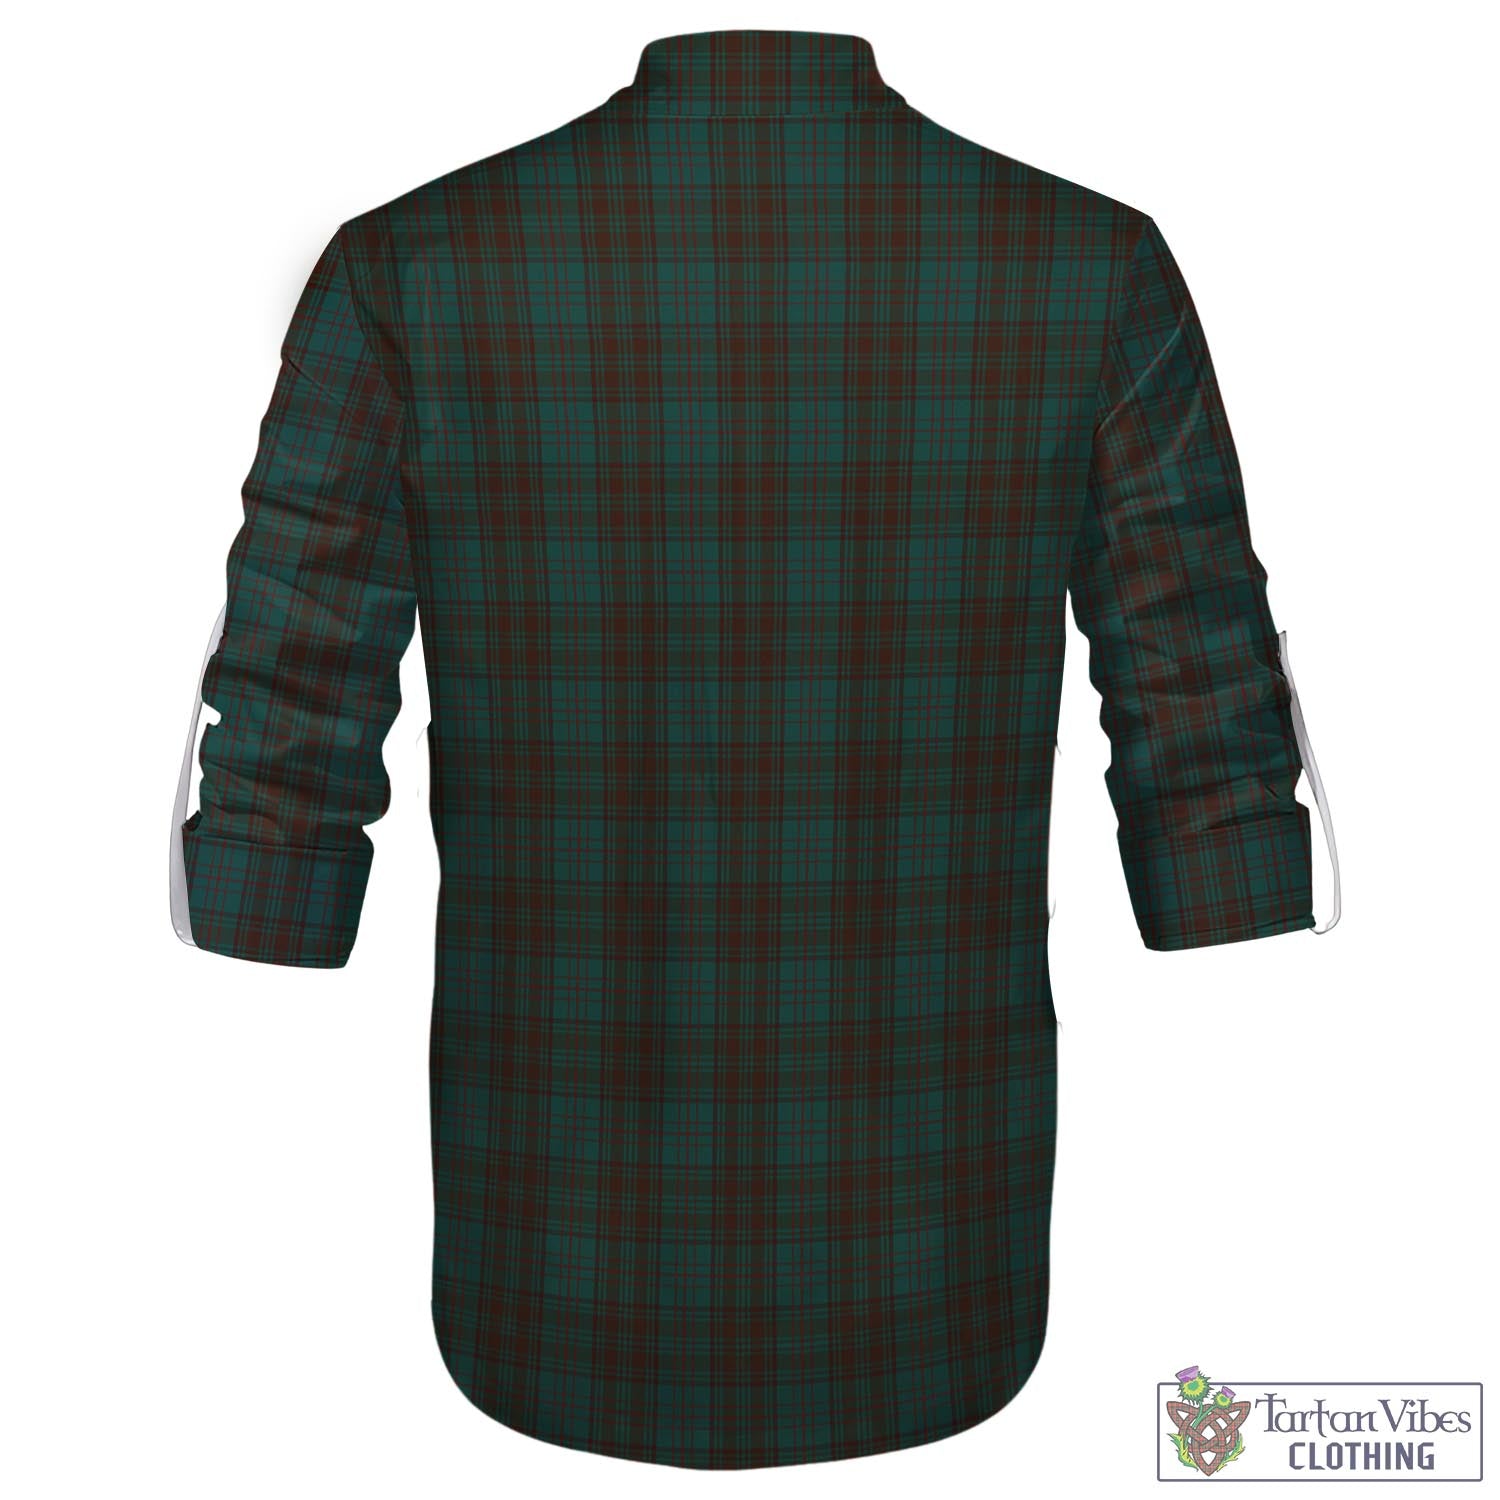 Tartan Vibes Clothing Dublin County Ireland Tartan Men's Scottish Traditional Jacobite Ghillie Kilt Shirt